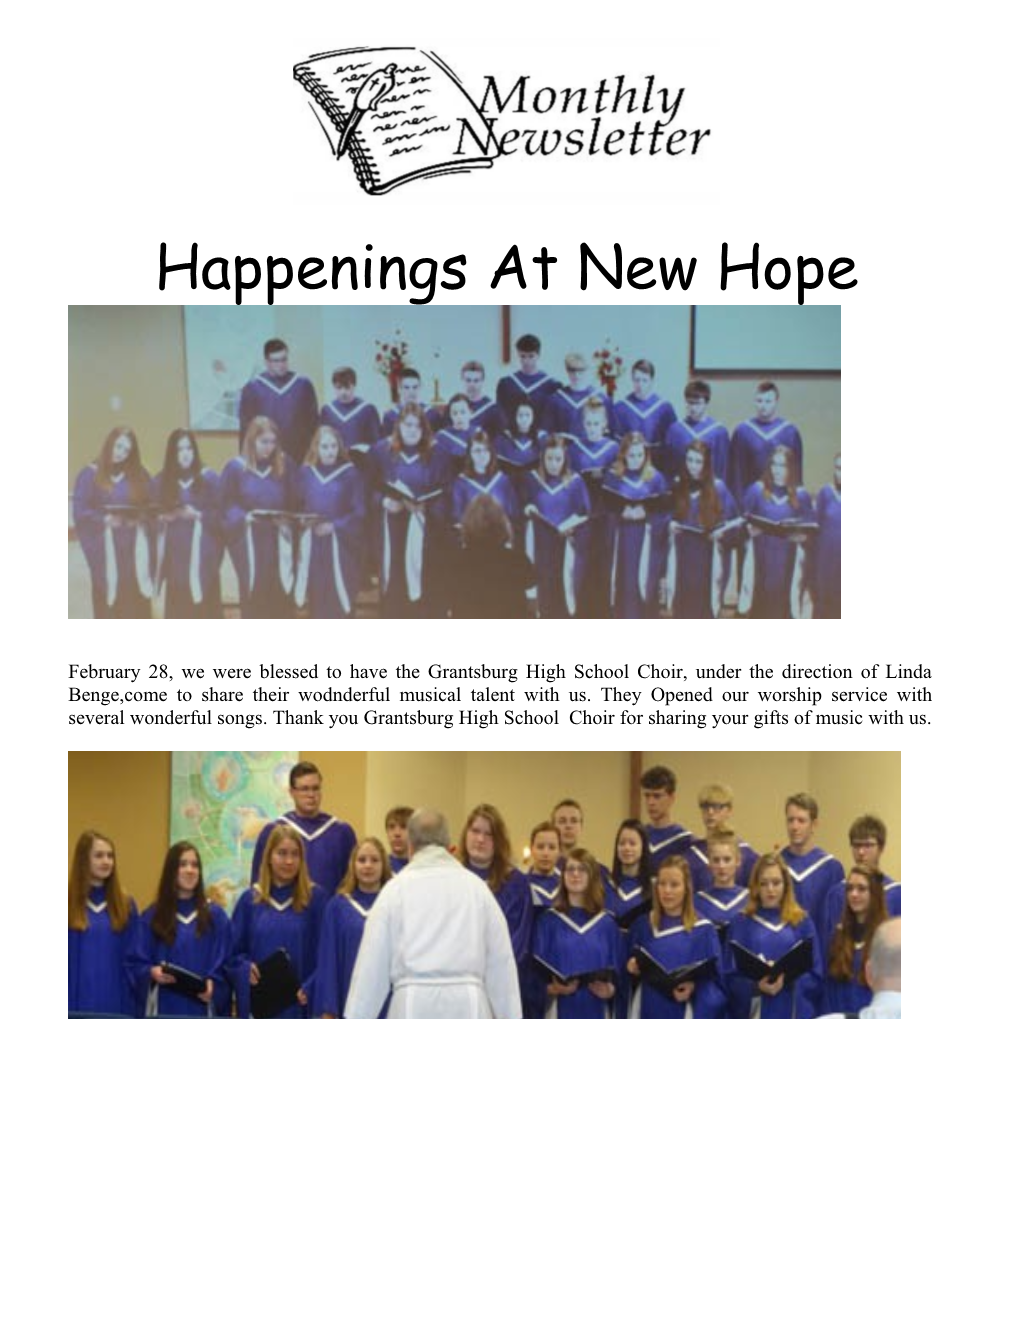 New Hope Lutheran Church